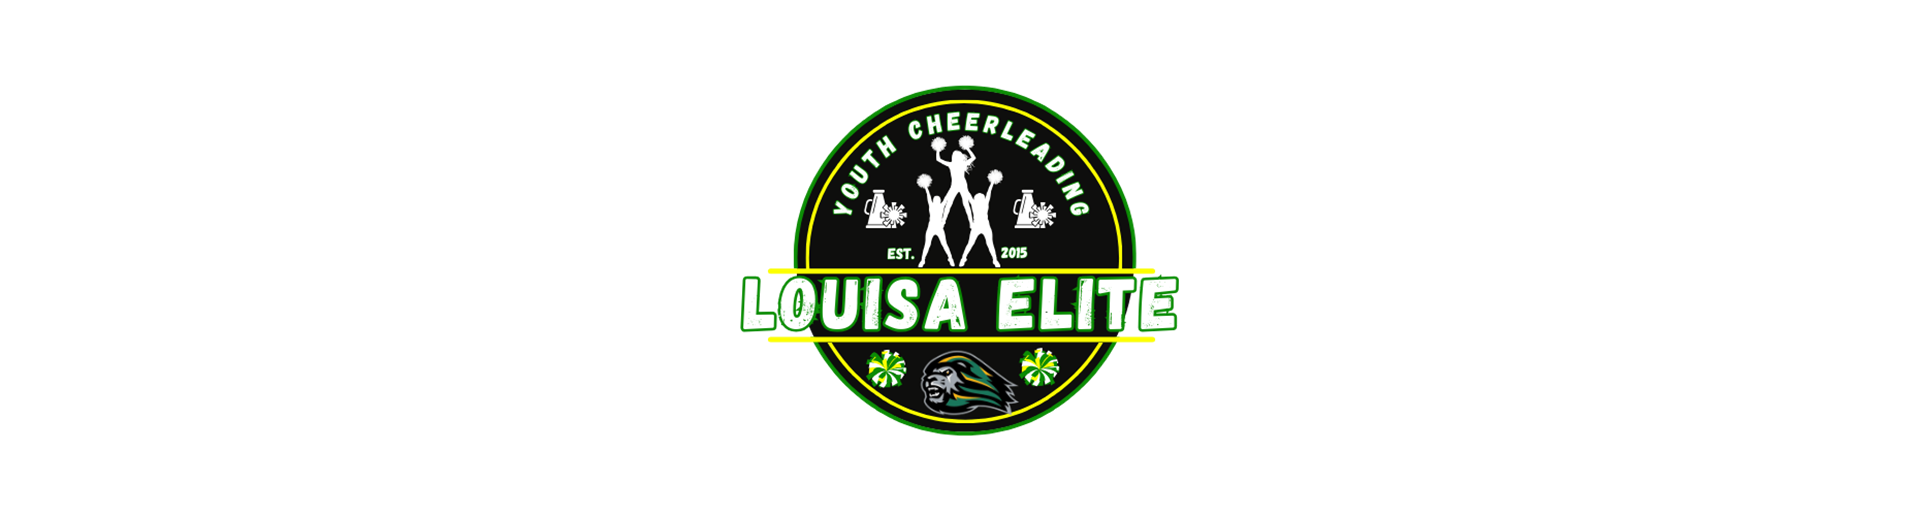 Visit Louisa Elite Youth Cheer, click logo!